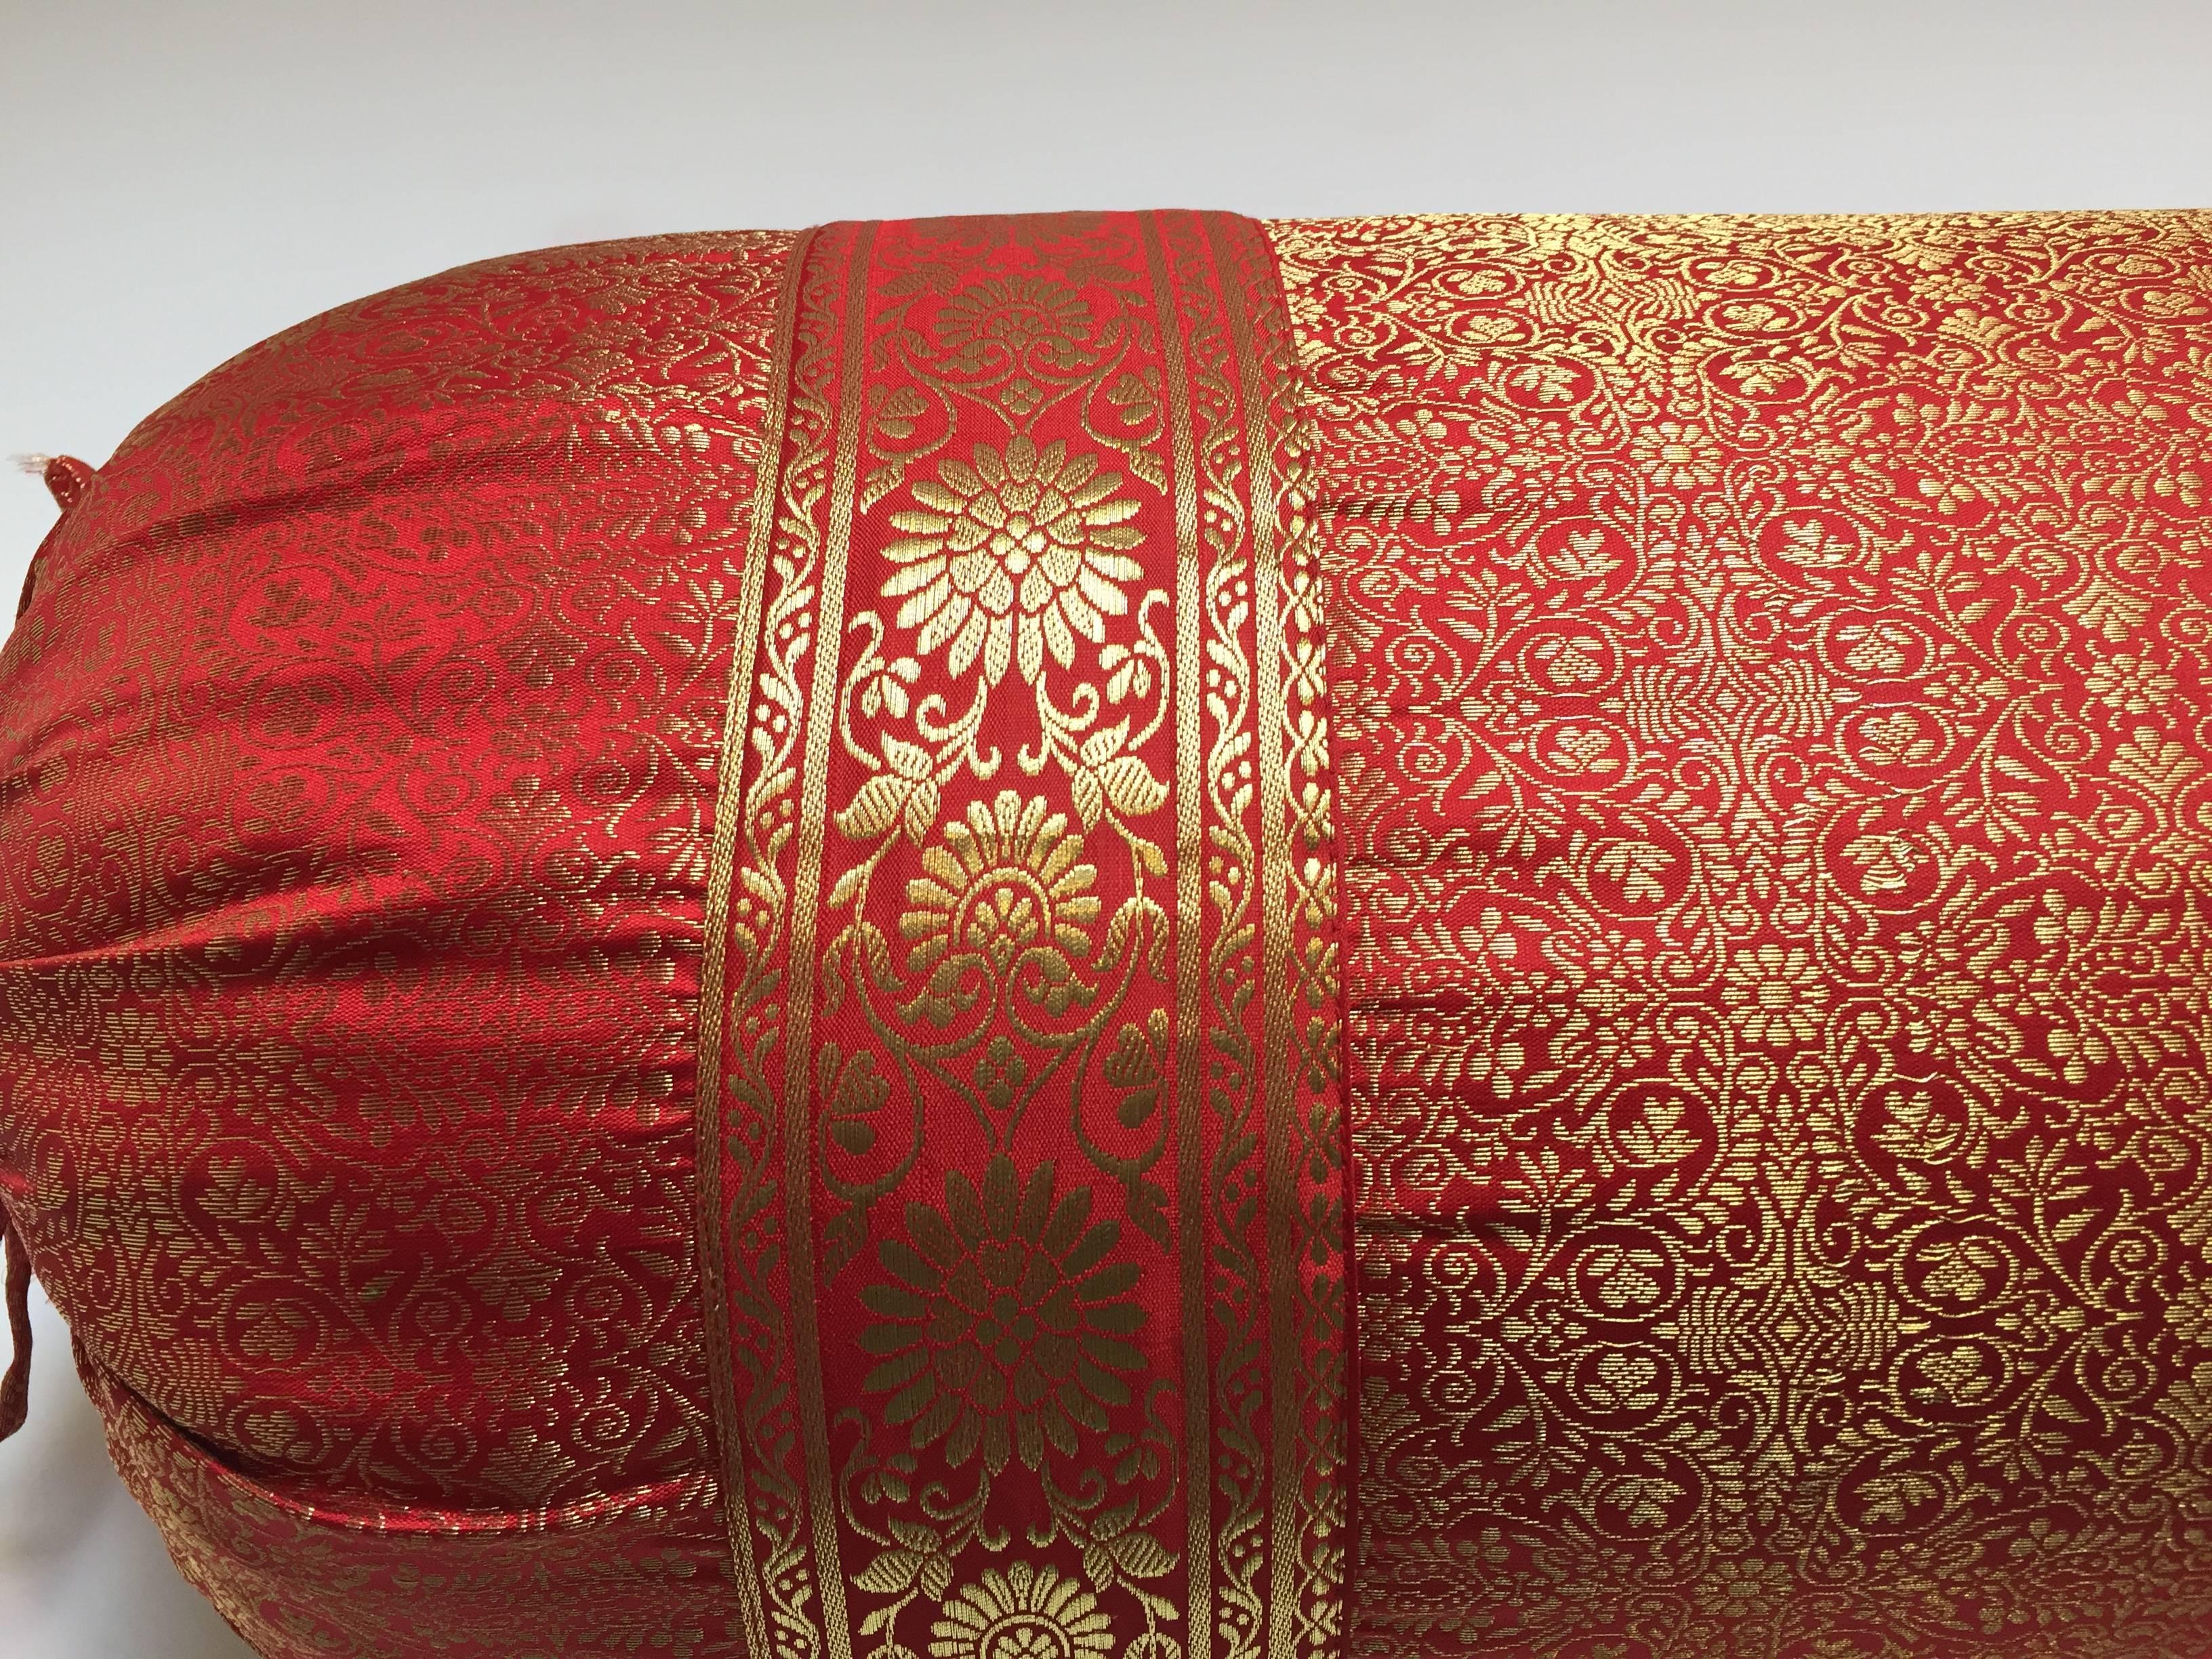 Indian Pair of Large Silk Bolster Pillows Made from Vintage Wedding Silk Saris